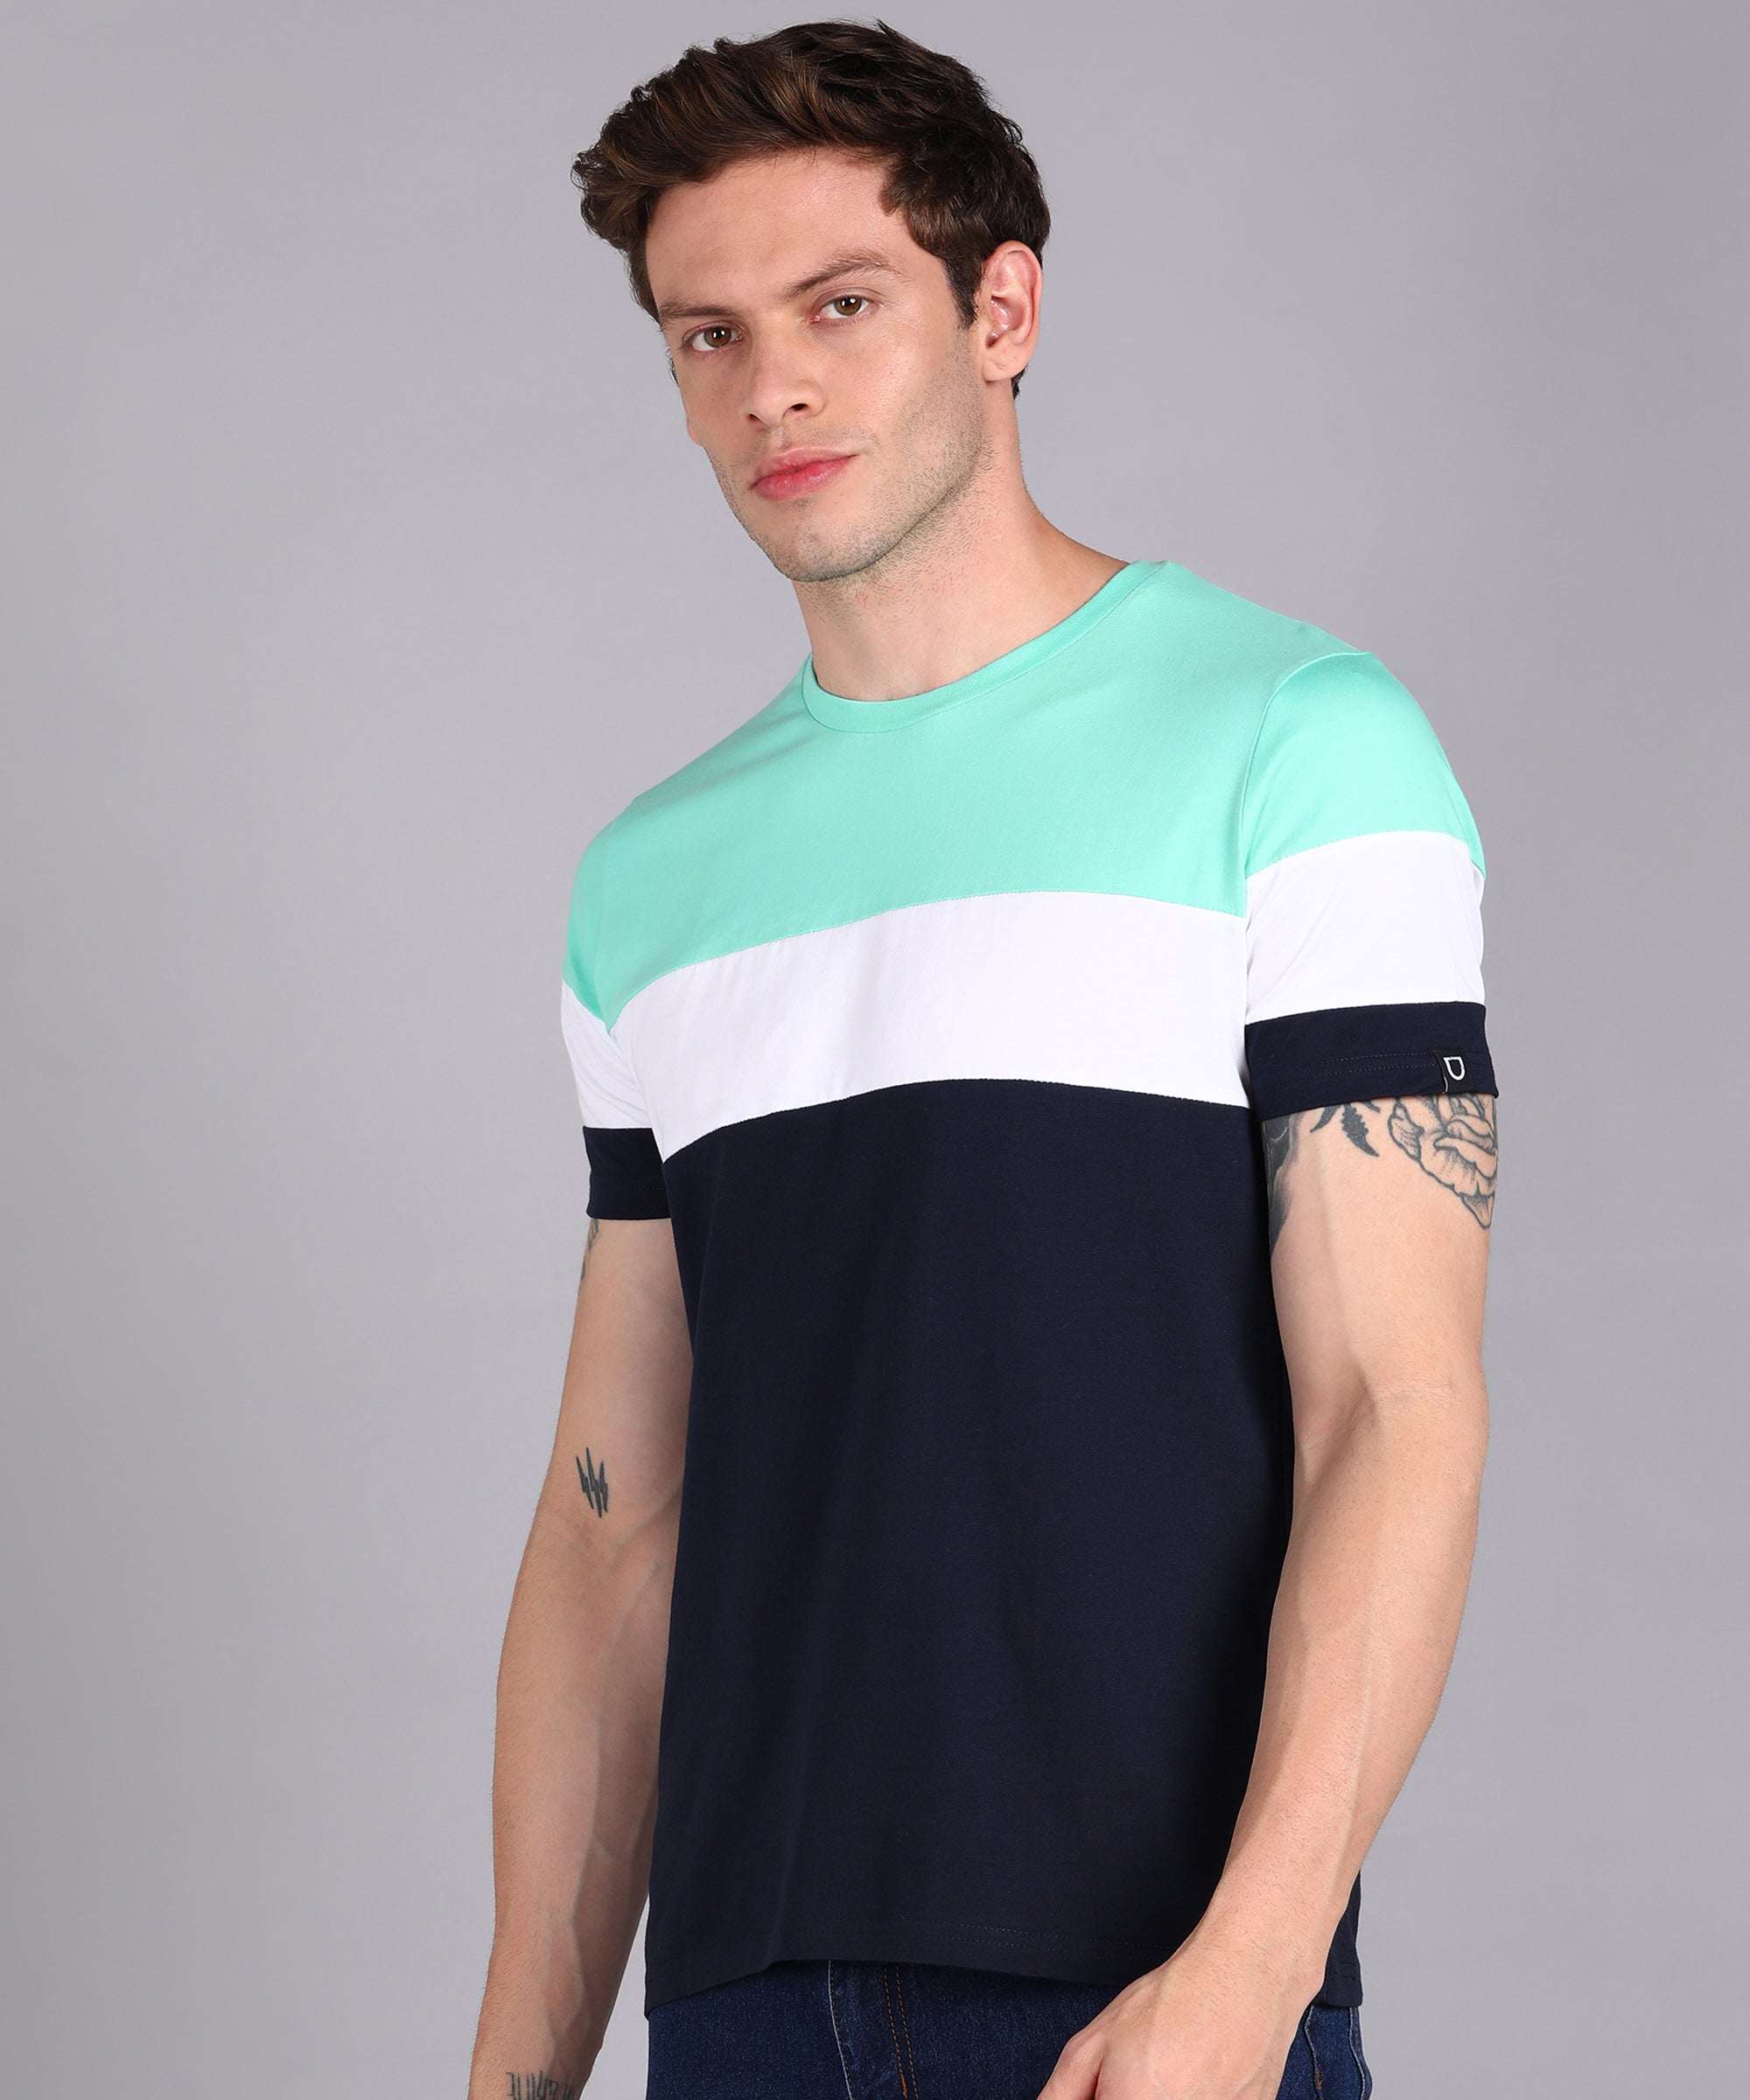 Urbano Fashion Men's Navy Blue, White, Mint Green Cotton Color-Block Slim Fit Half Sleeve T-Shirt